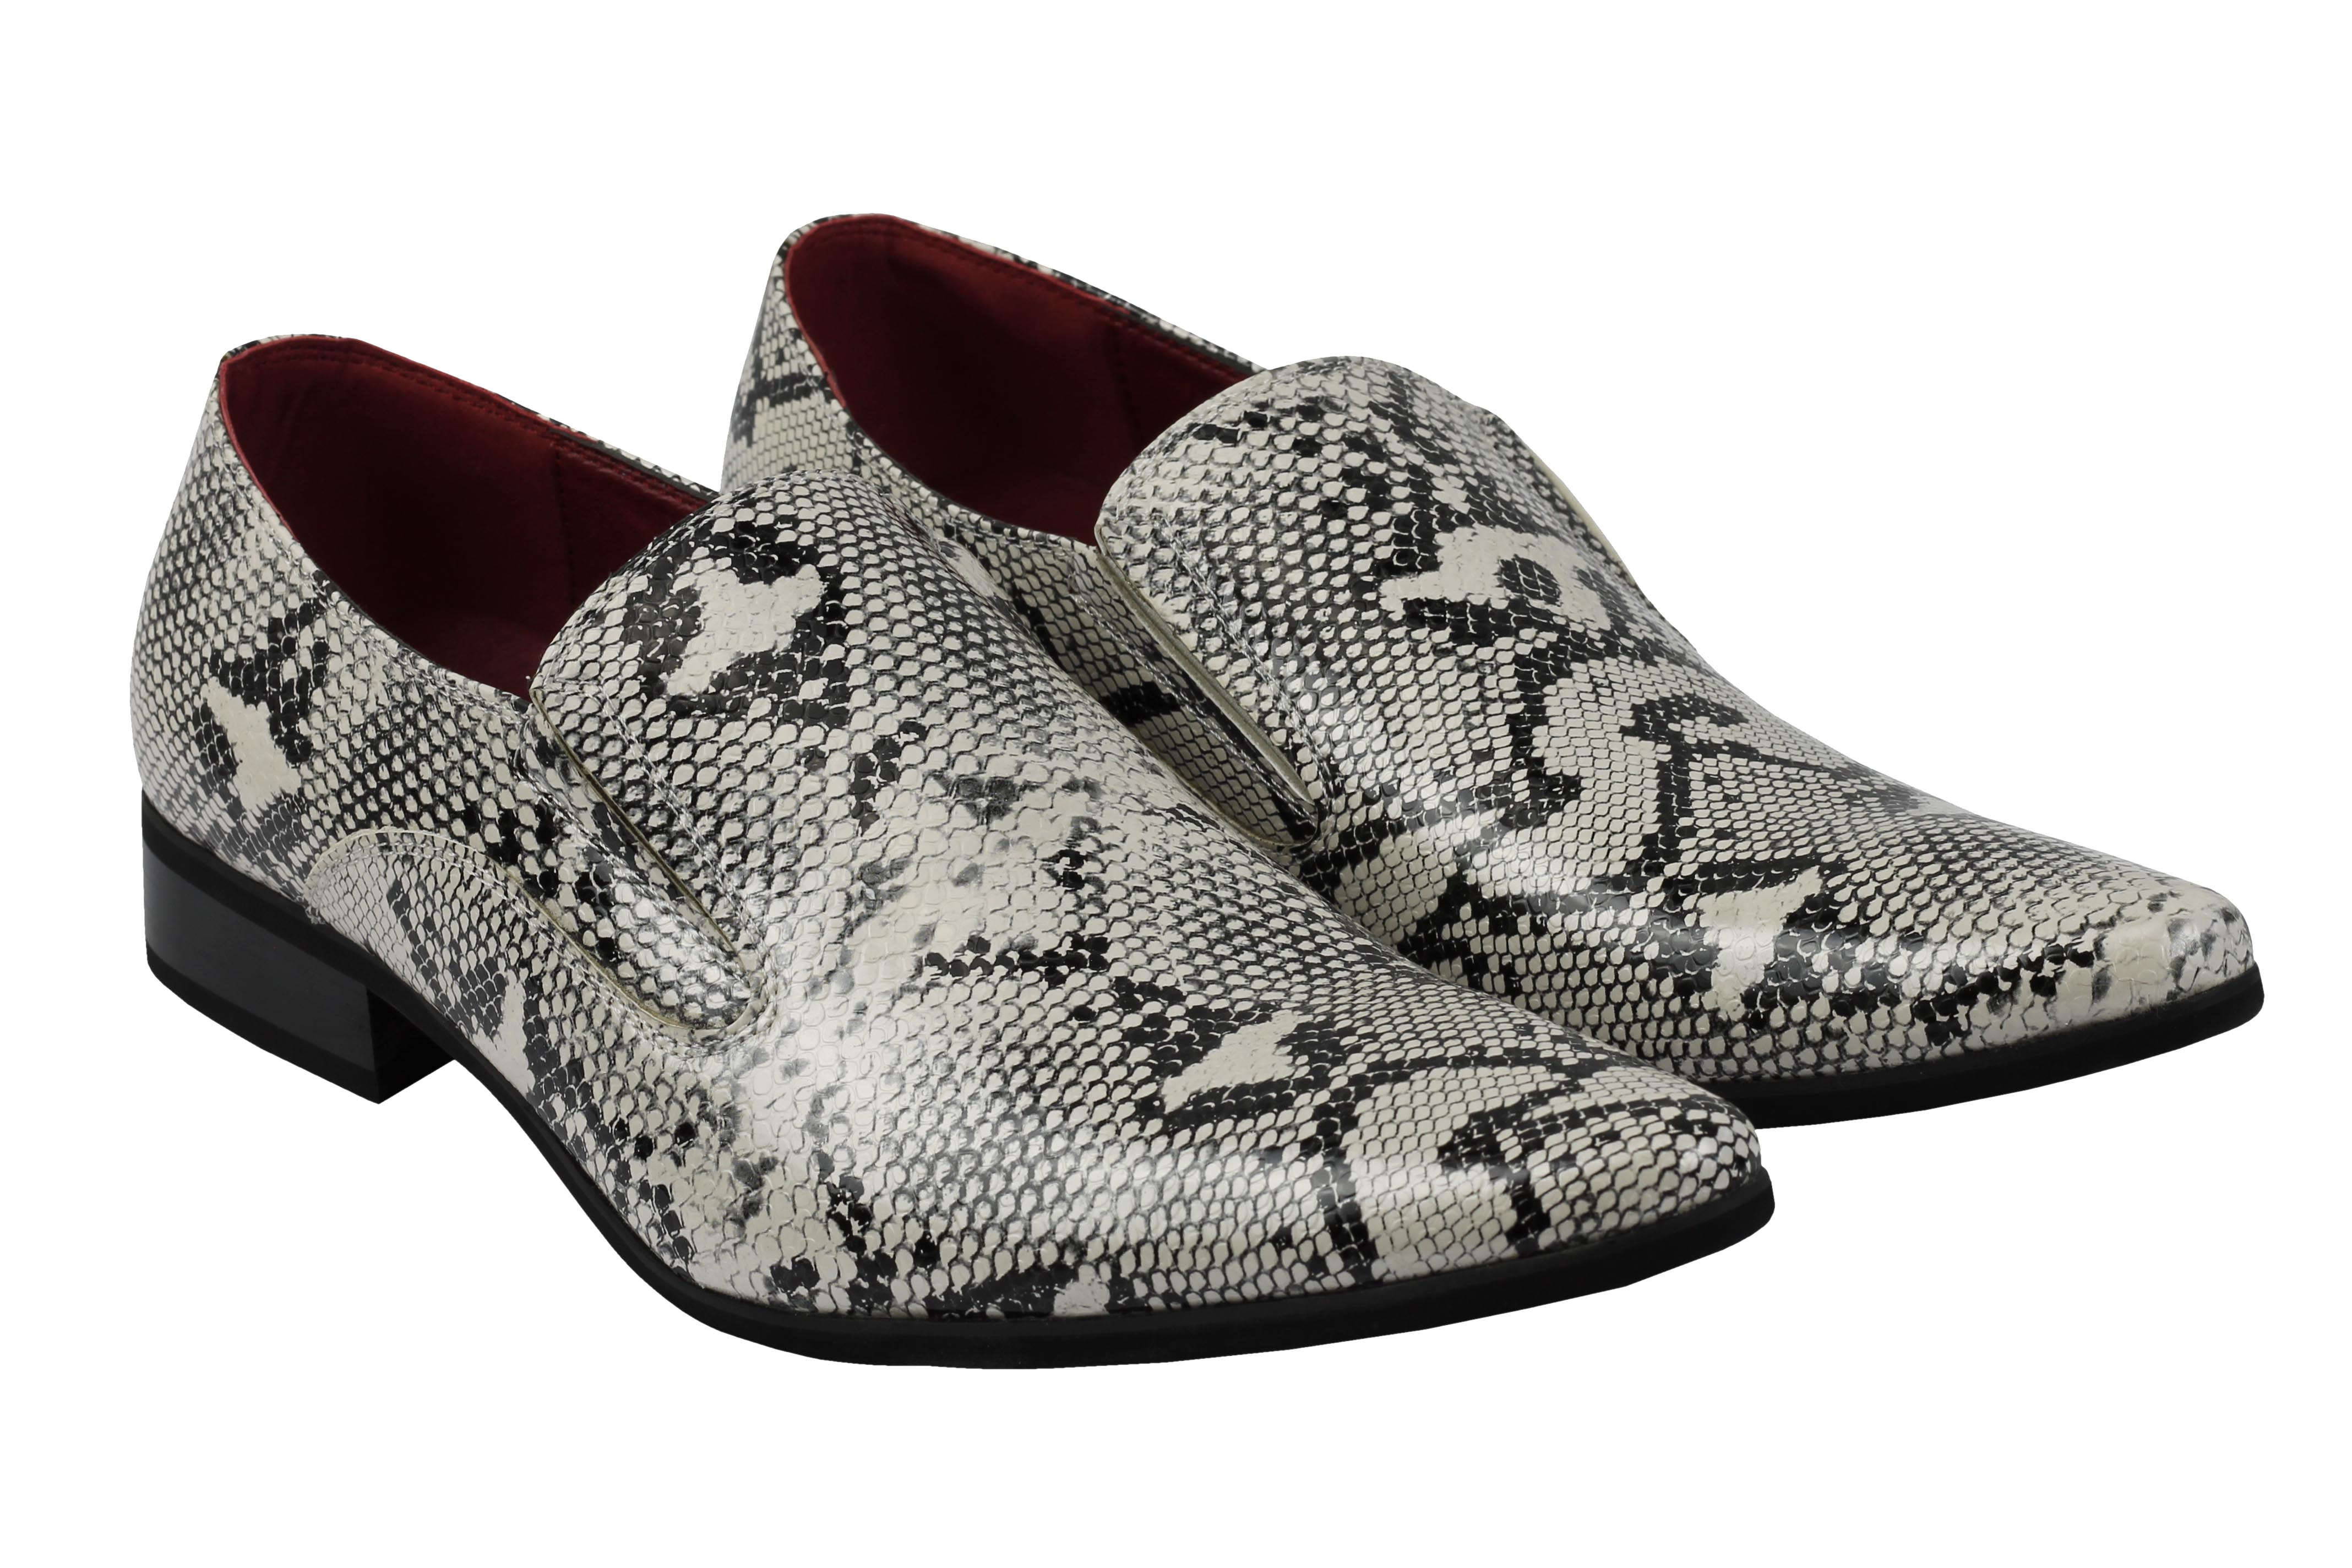 Mens Leather Lined Smart Slip On Loafers Shoes Snake Skin Print Shiny Patent EBay